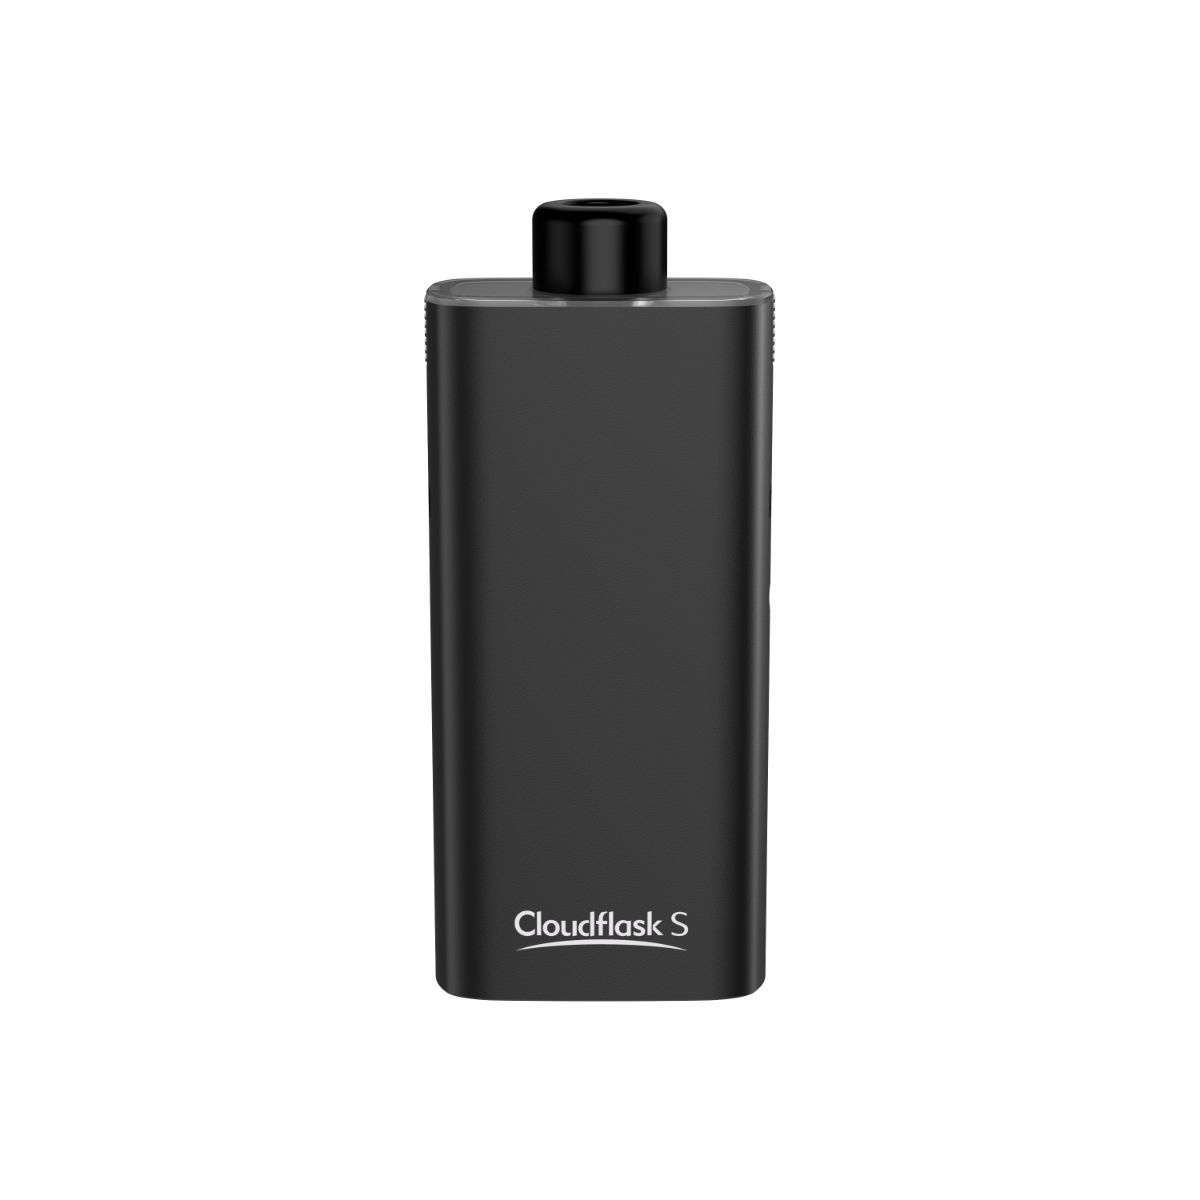 Aspire Cloudflask S Kit - 5.5ml